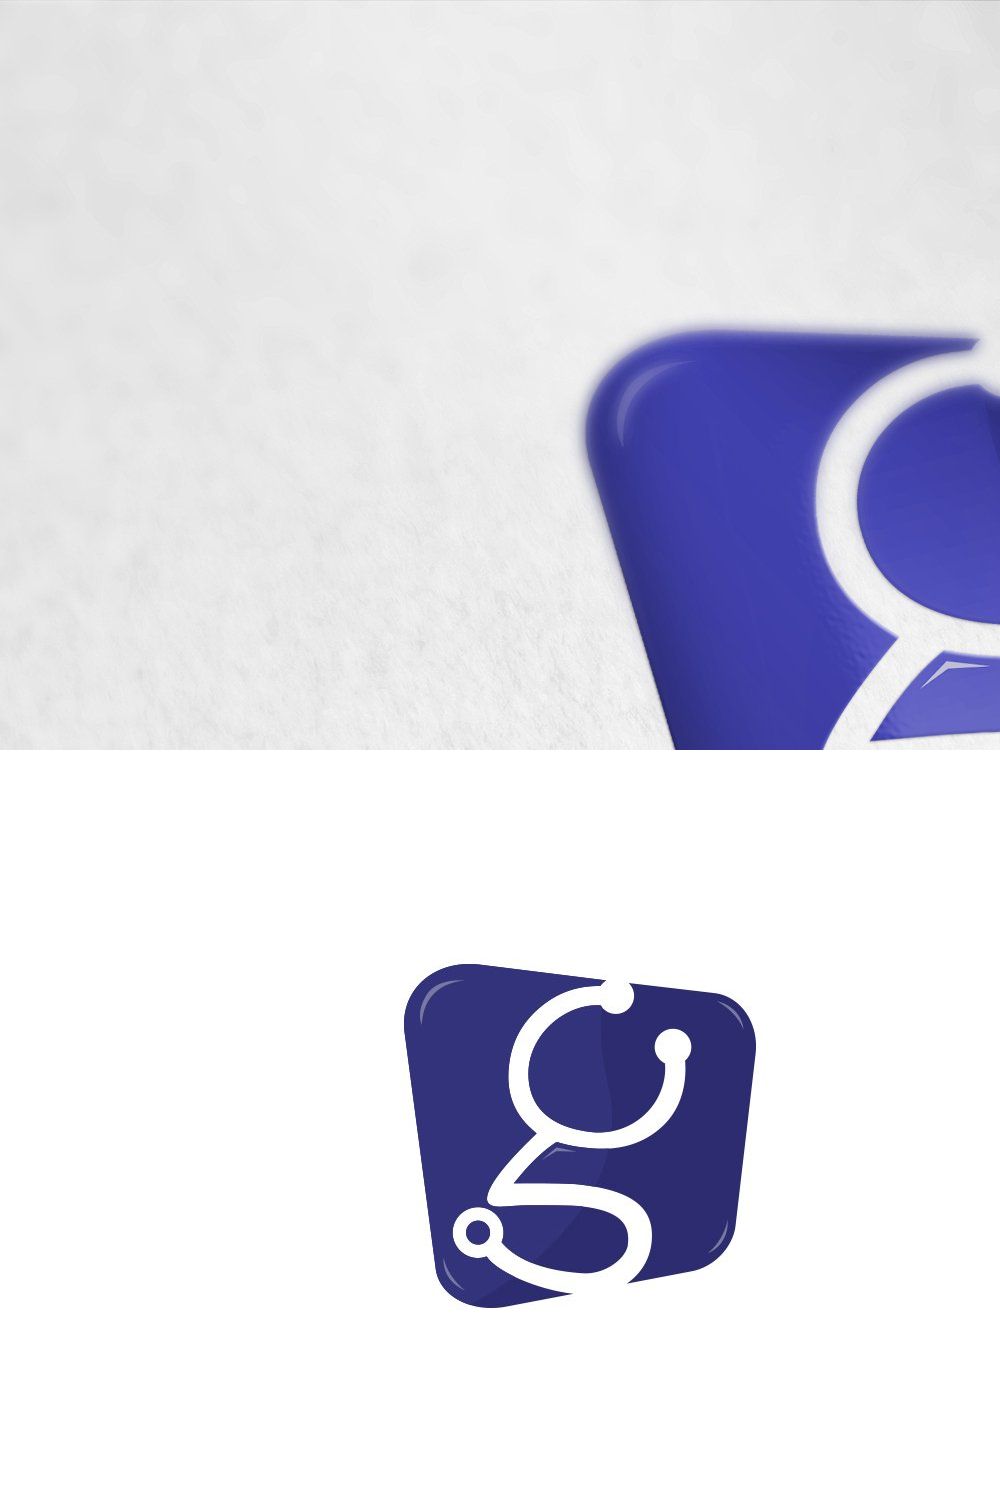 G Letter stethoscope logo icon pinterest preview image.